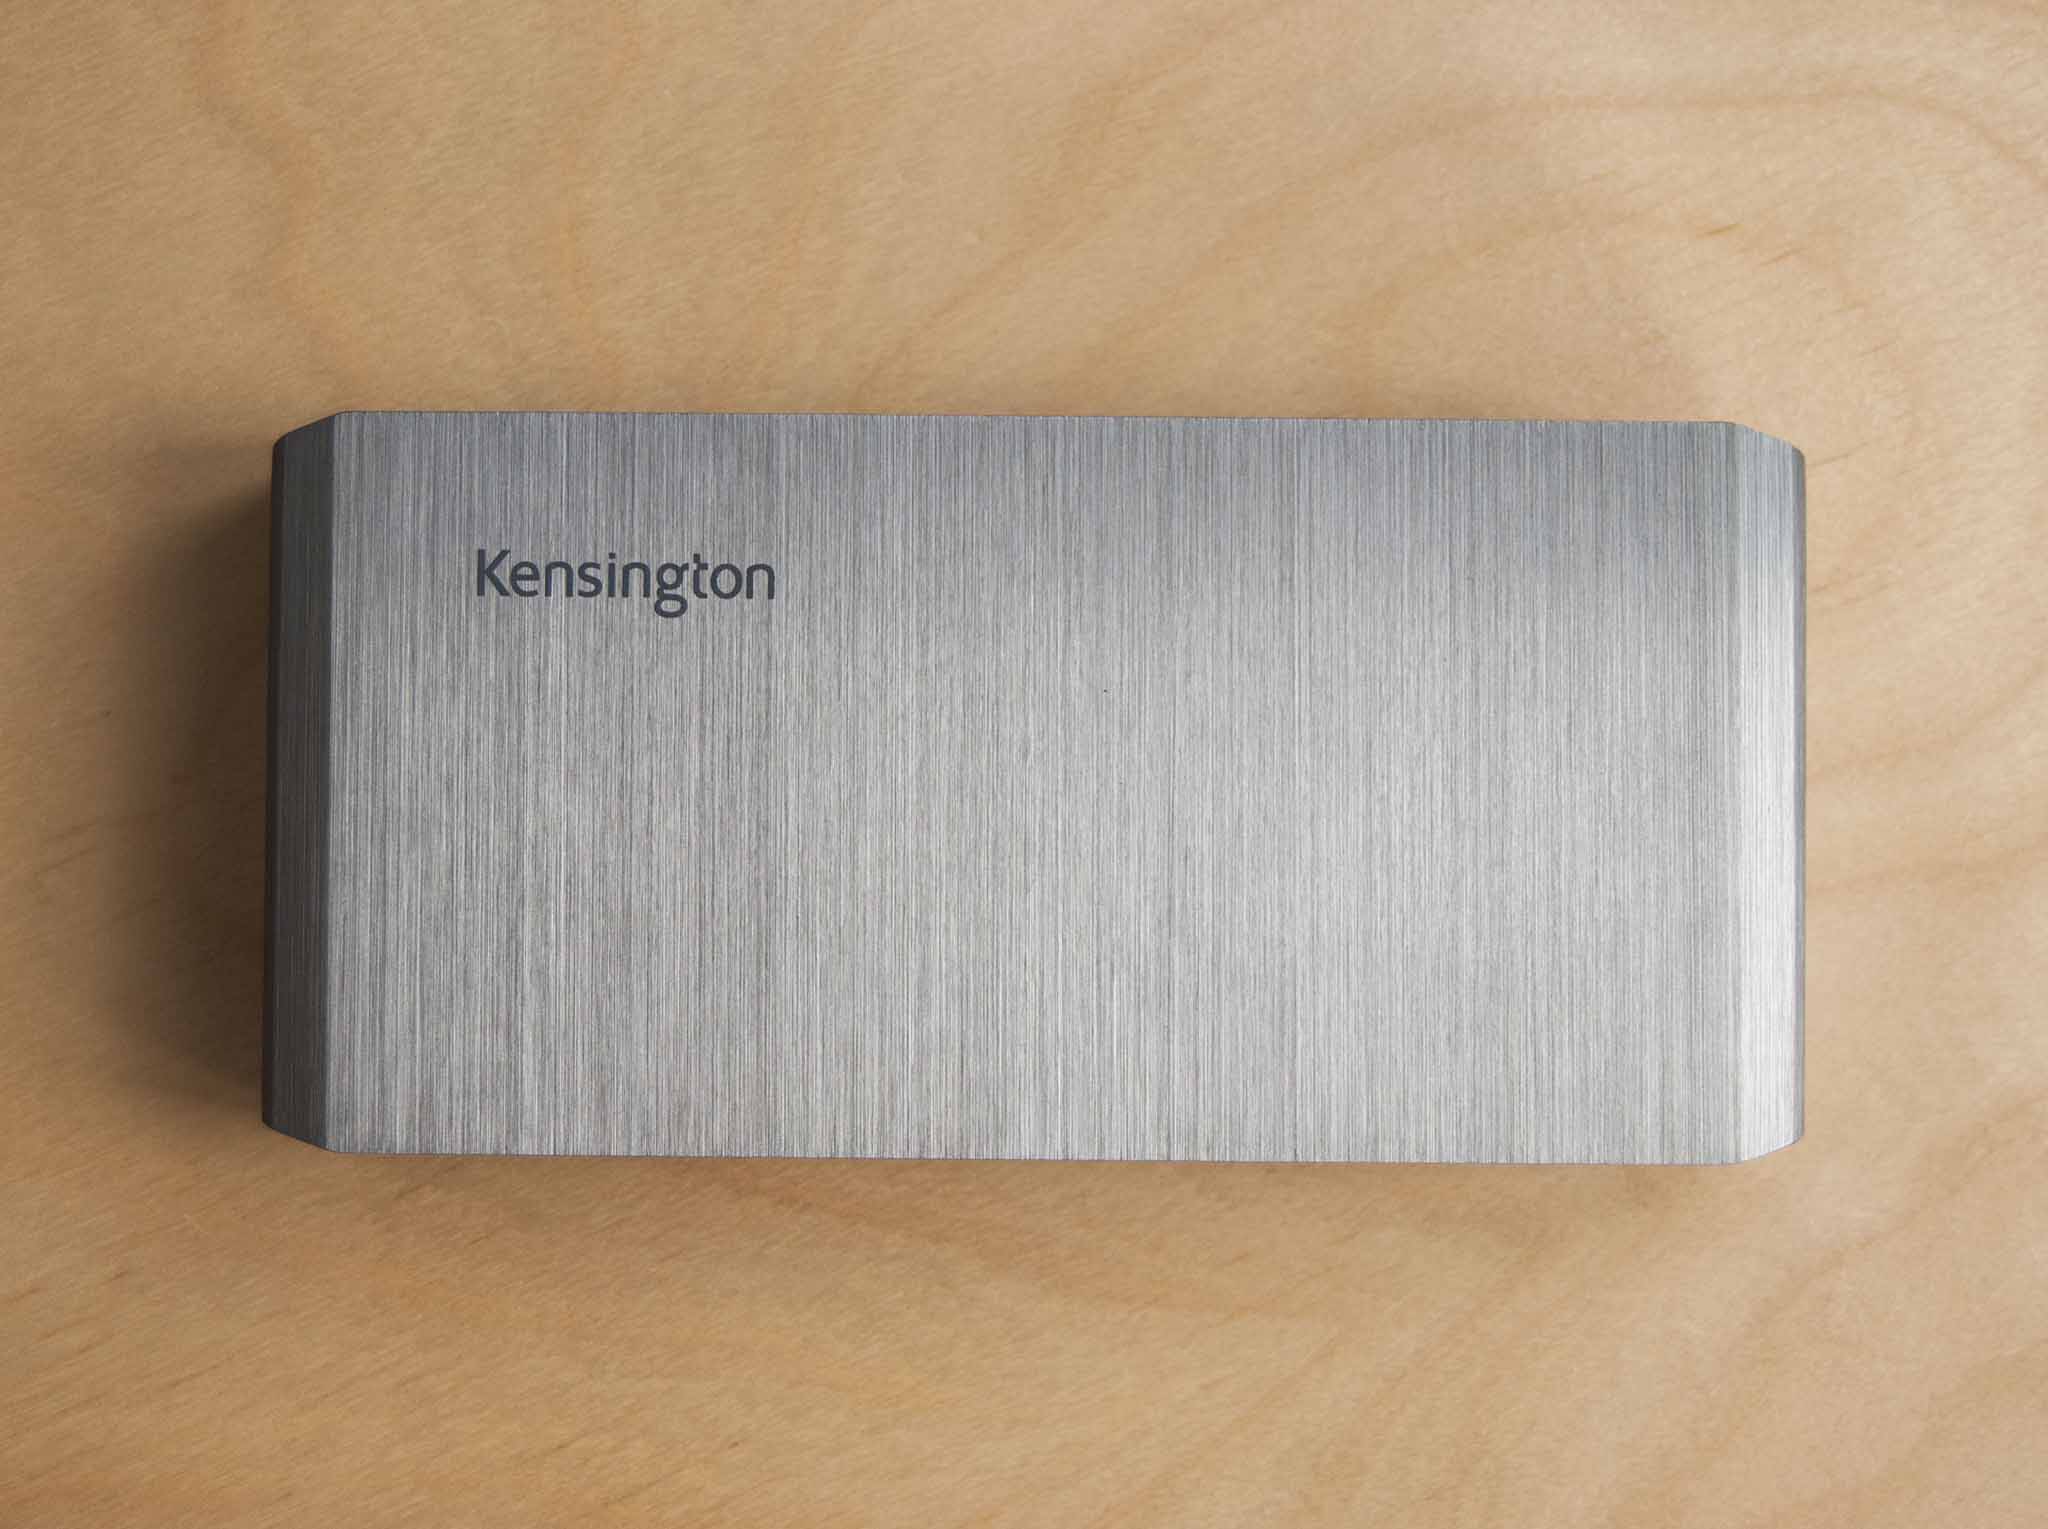 kensington-sd5500t-hero-01.jpg